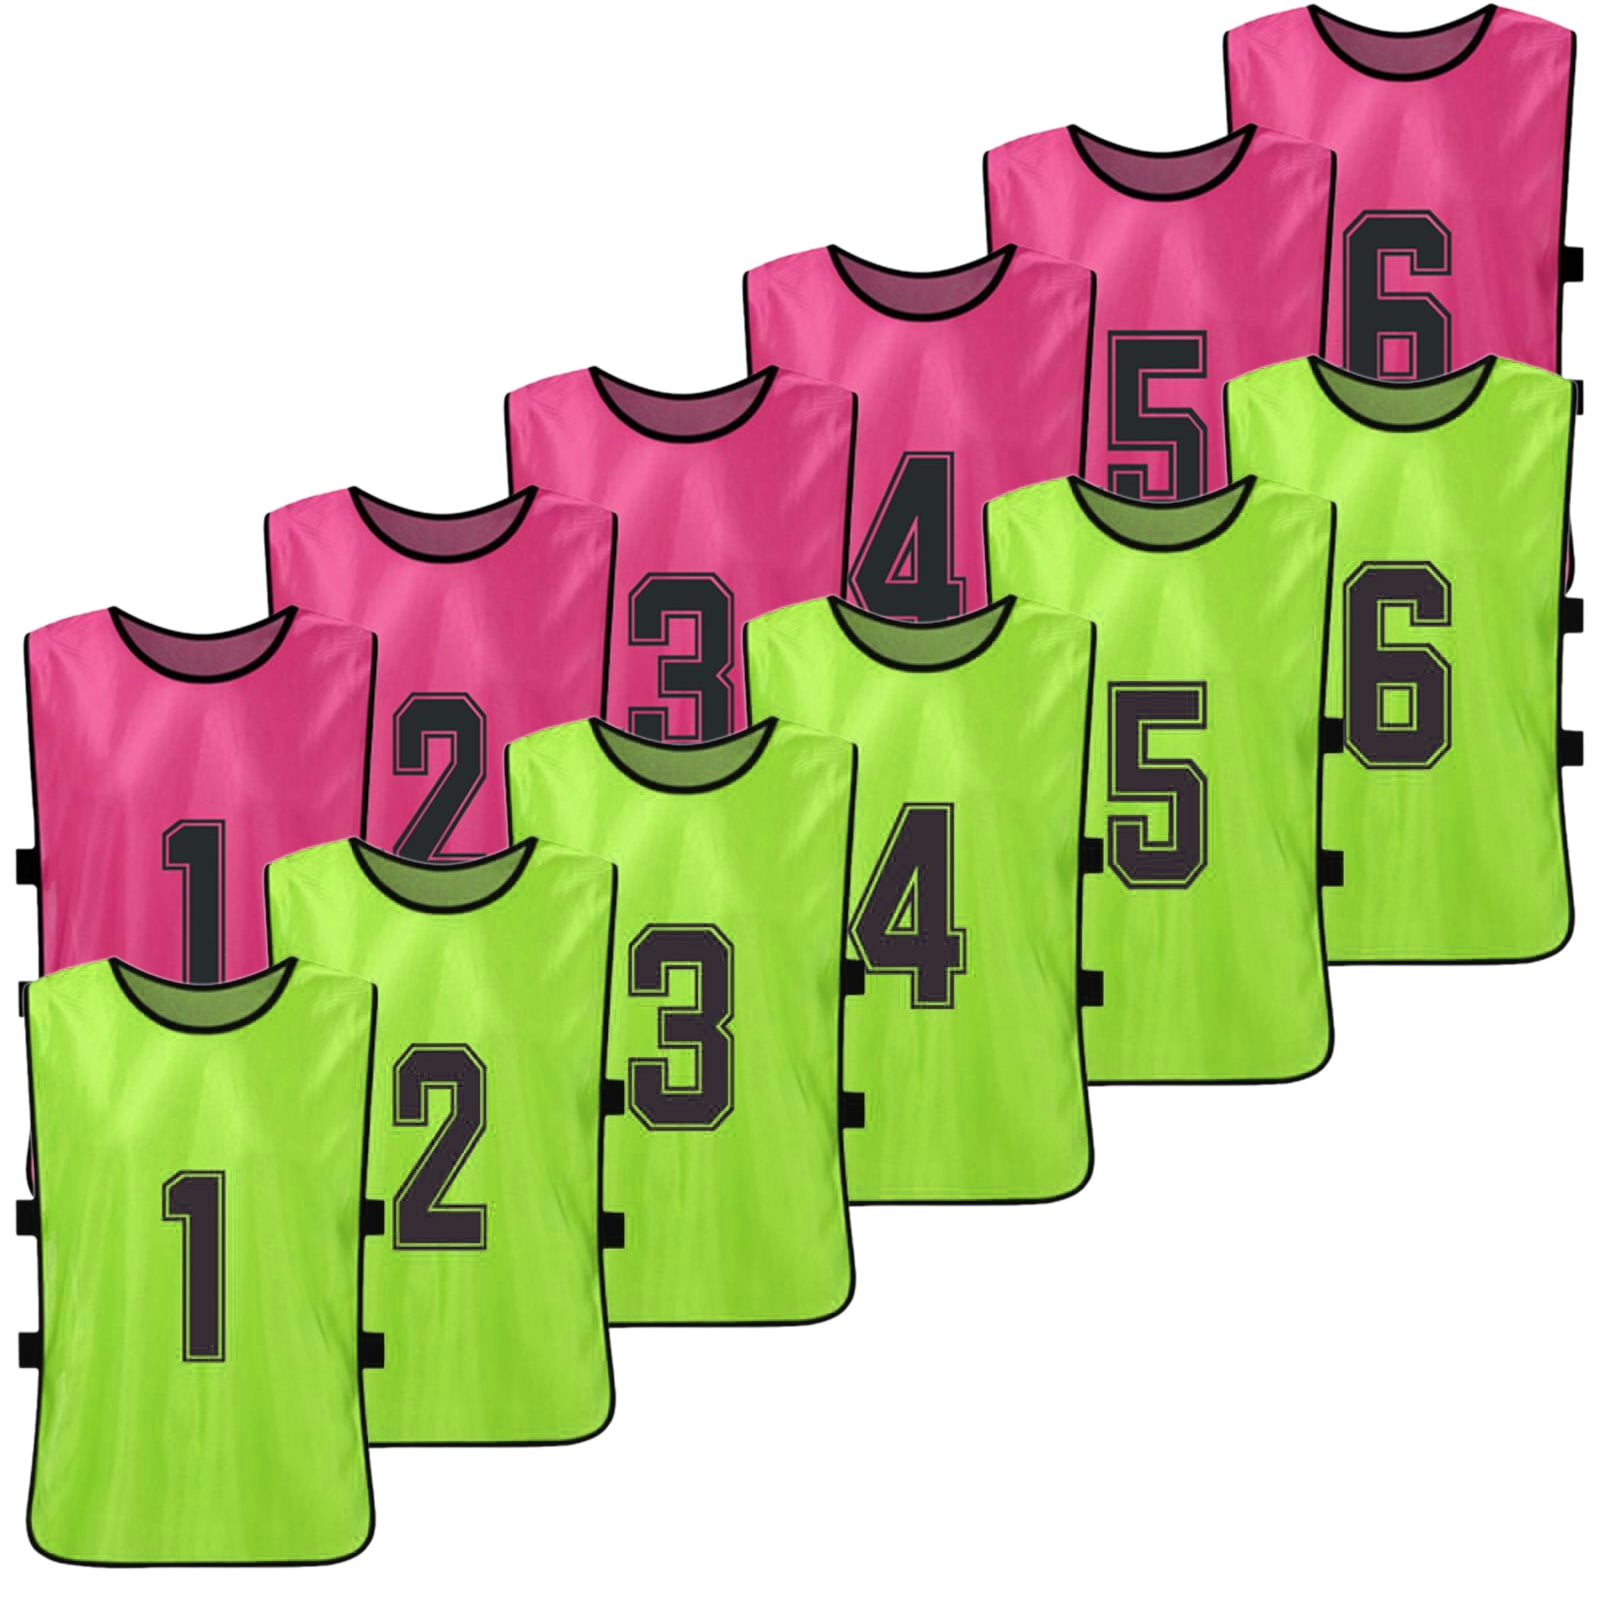 Antoyo Pinnies Soccer pinnies for Soccer Mesh Basketball Jerseys 